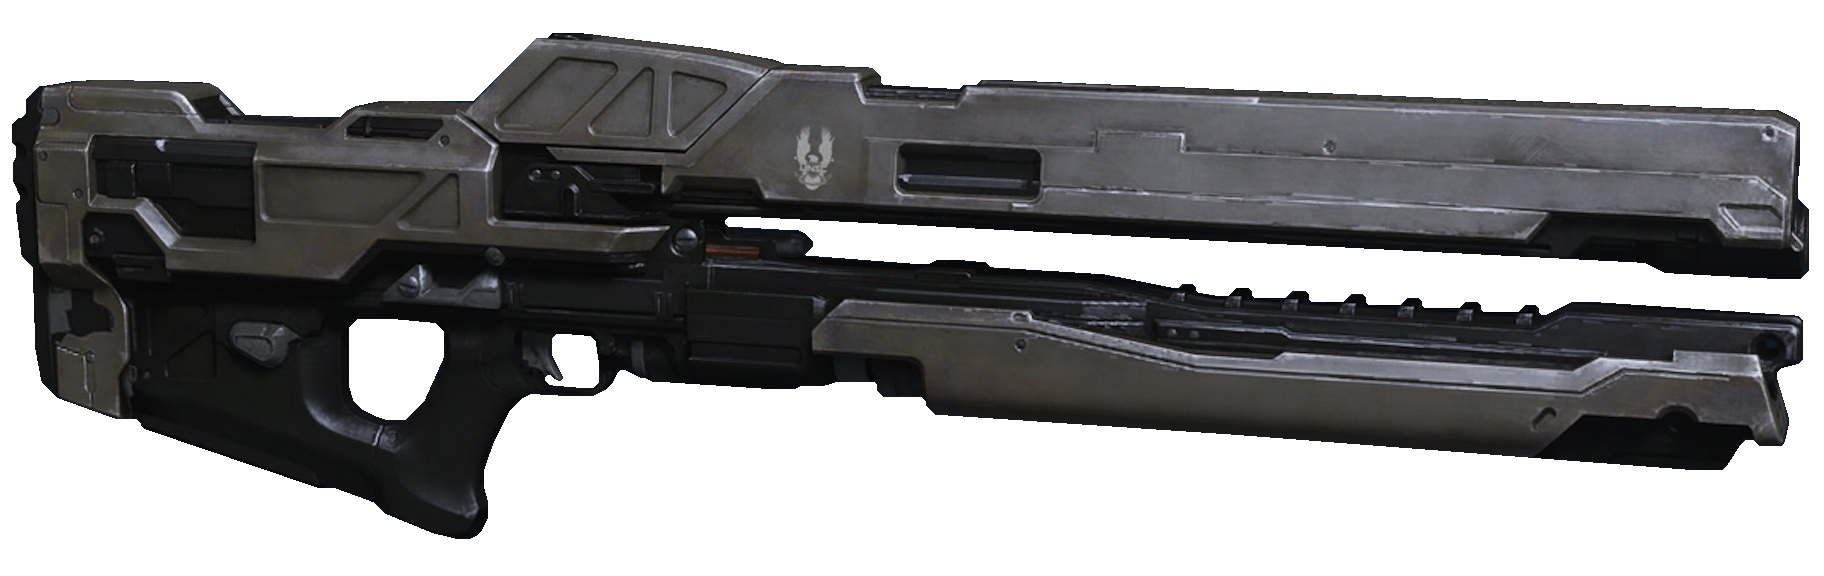 【HALO軍械頻道】ARC-920磁軌槍 —— 最好的單兵電磁武器-第18張